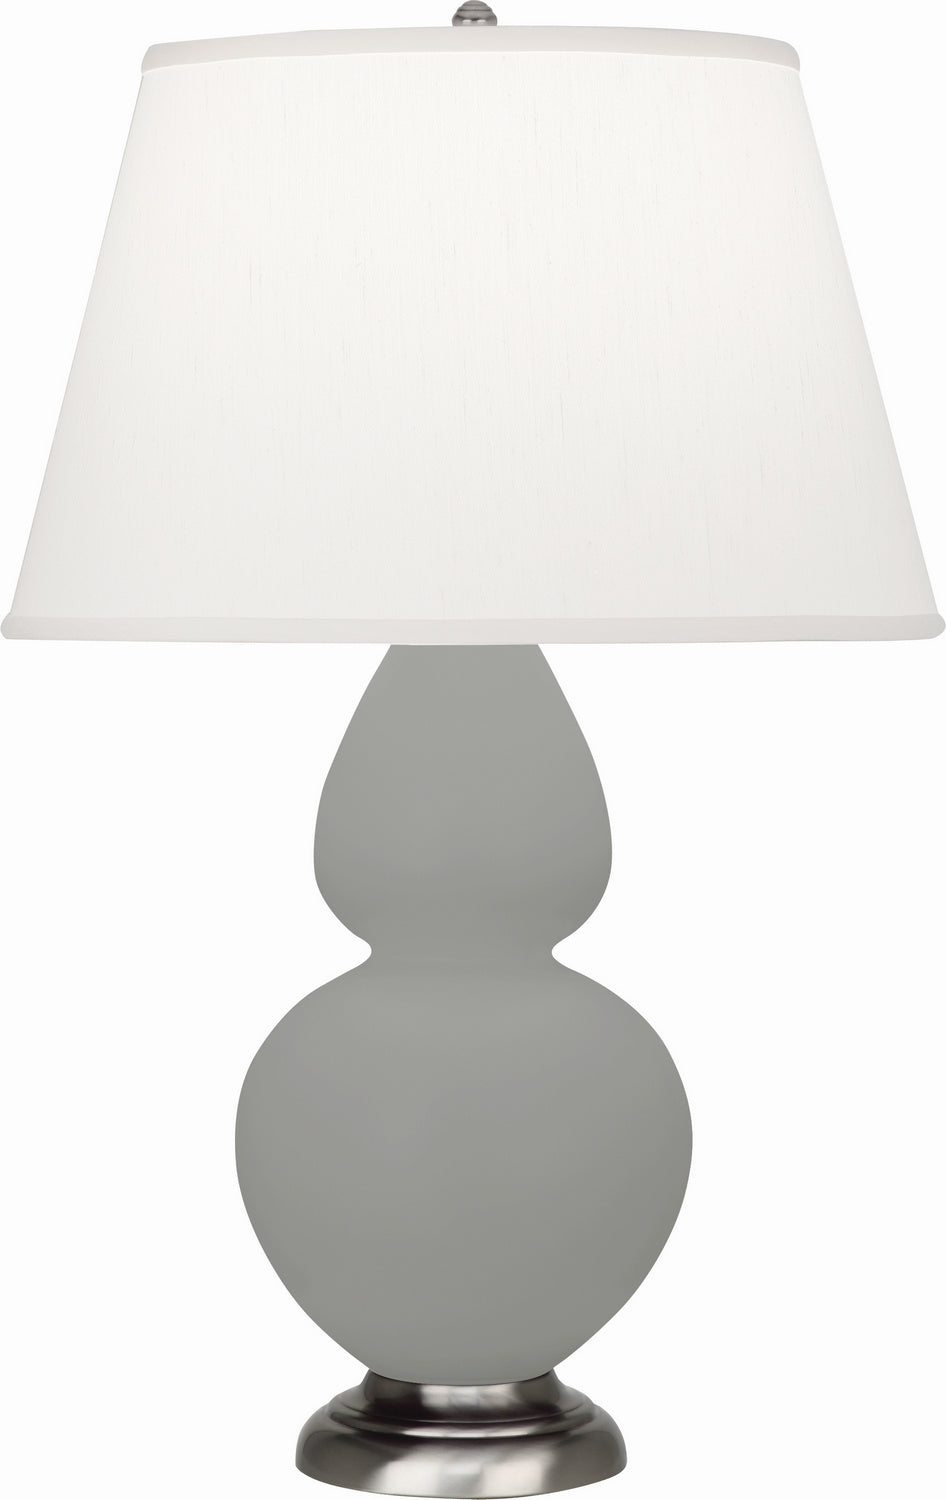 Robert Abbey - MST59 - One Light Table Lamp - Double Gourd